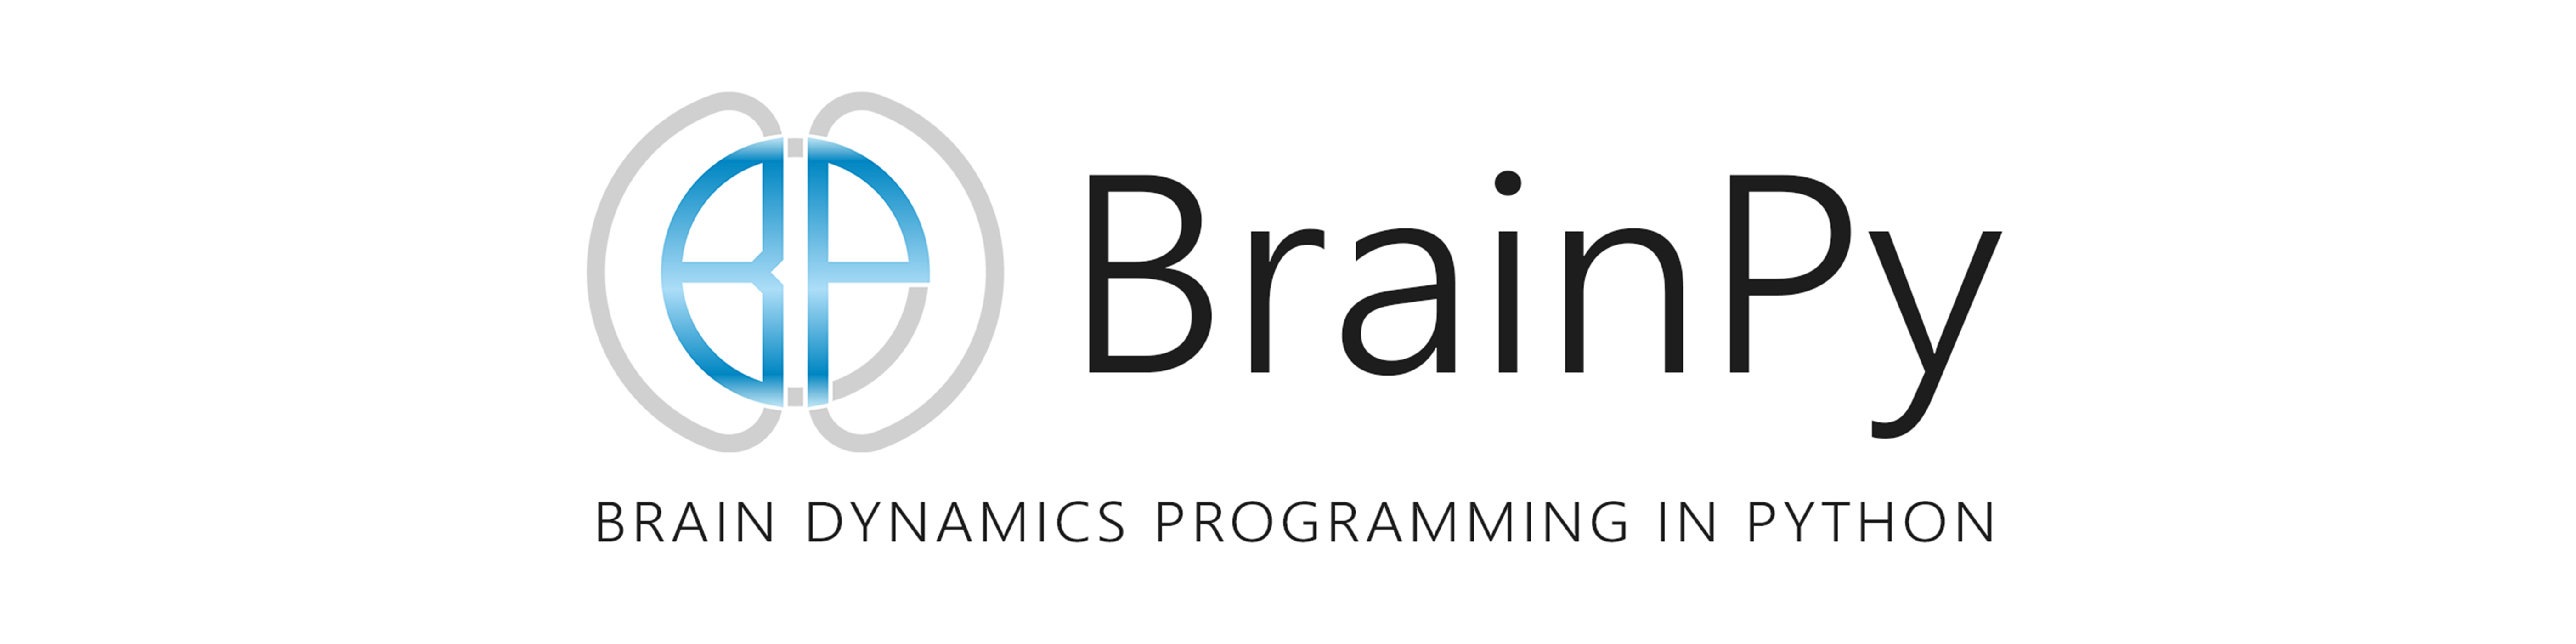 Header image of BrainPy - brain dynamics programming in Python.